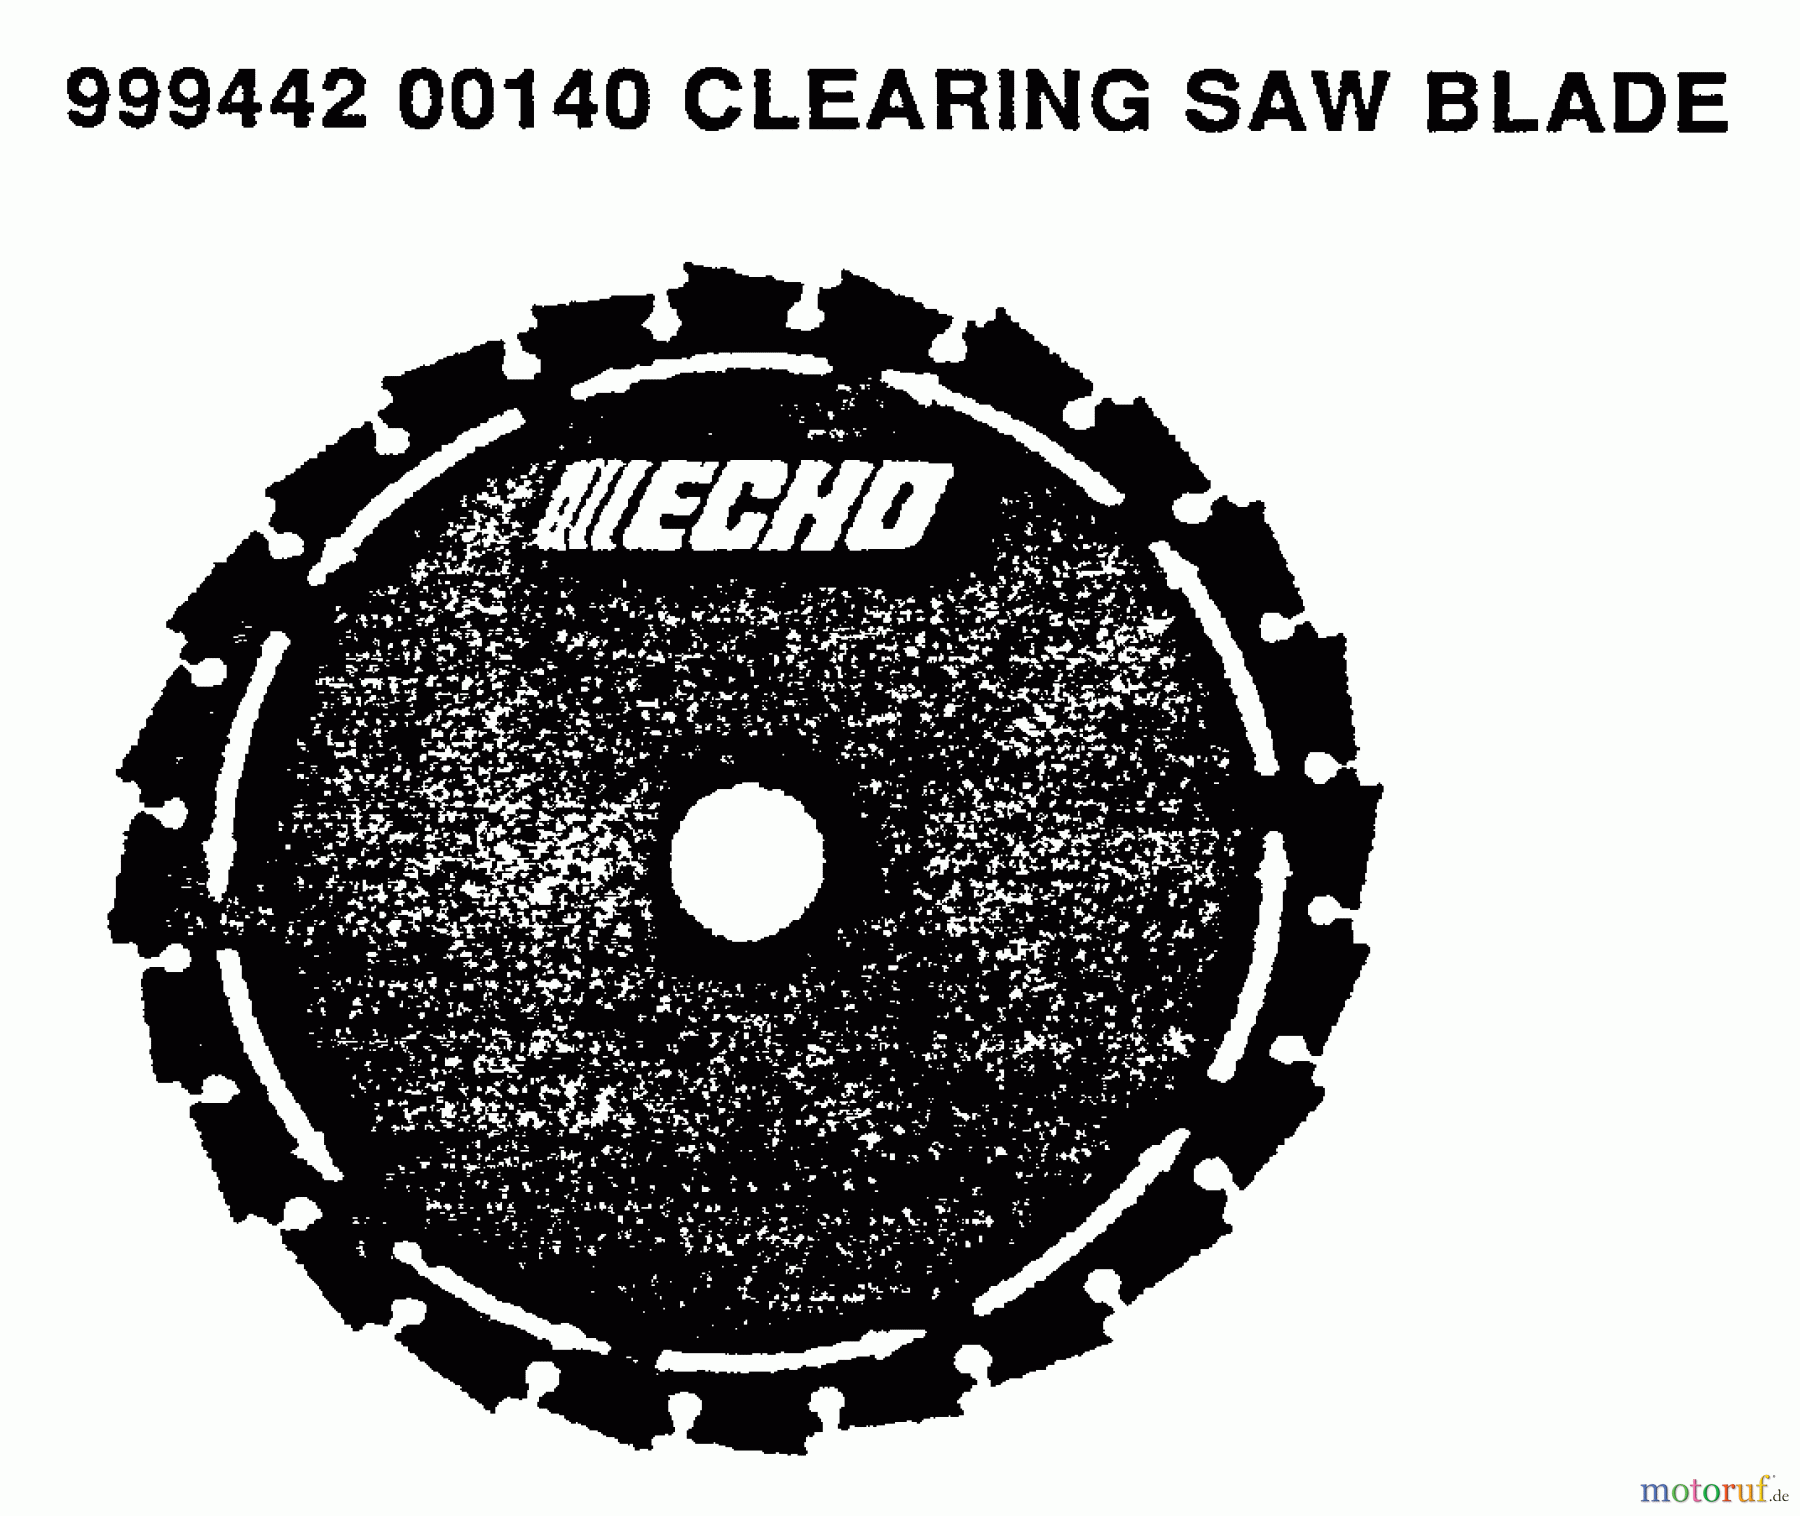  Echo Trimmer, Faden / Bürste SRM-3000 - Echo String Trimmer, S/N:037501 - 043225 Clearing Saw Blade P/N 99944200140